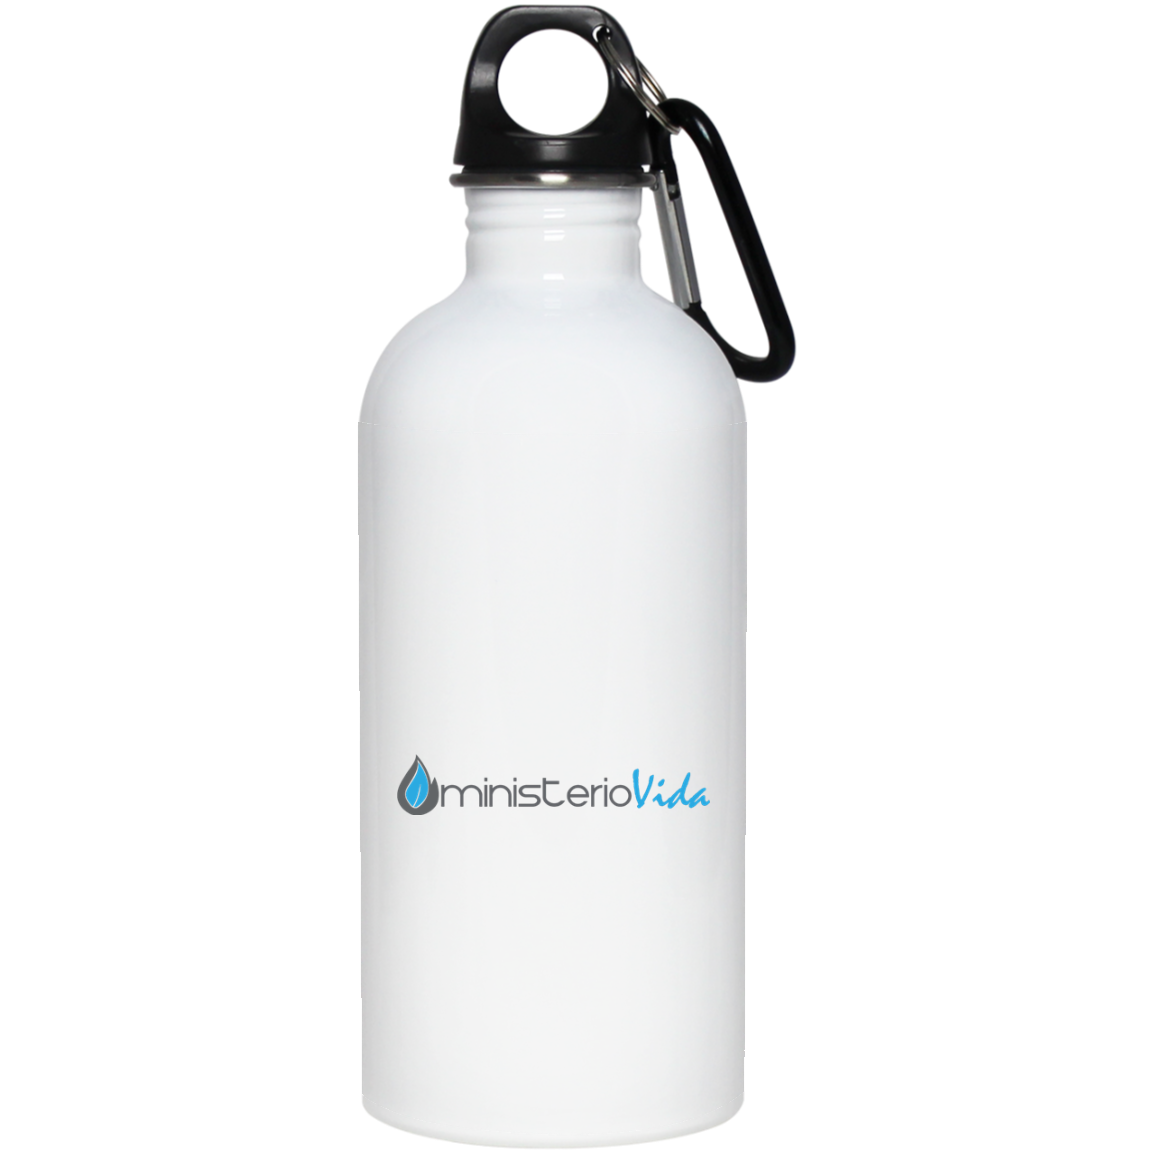 Ministerio Vida 20 oz Stainless Steel Water Bottle